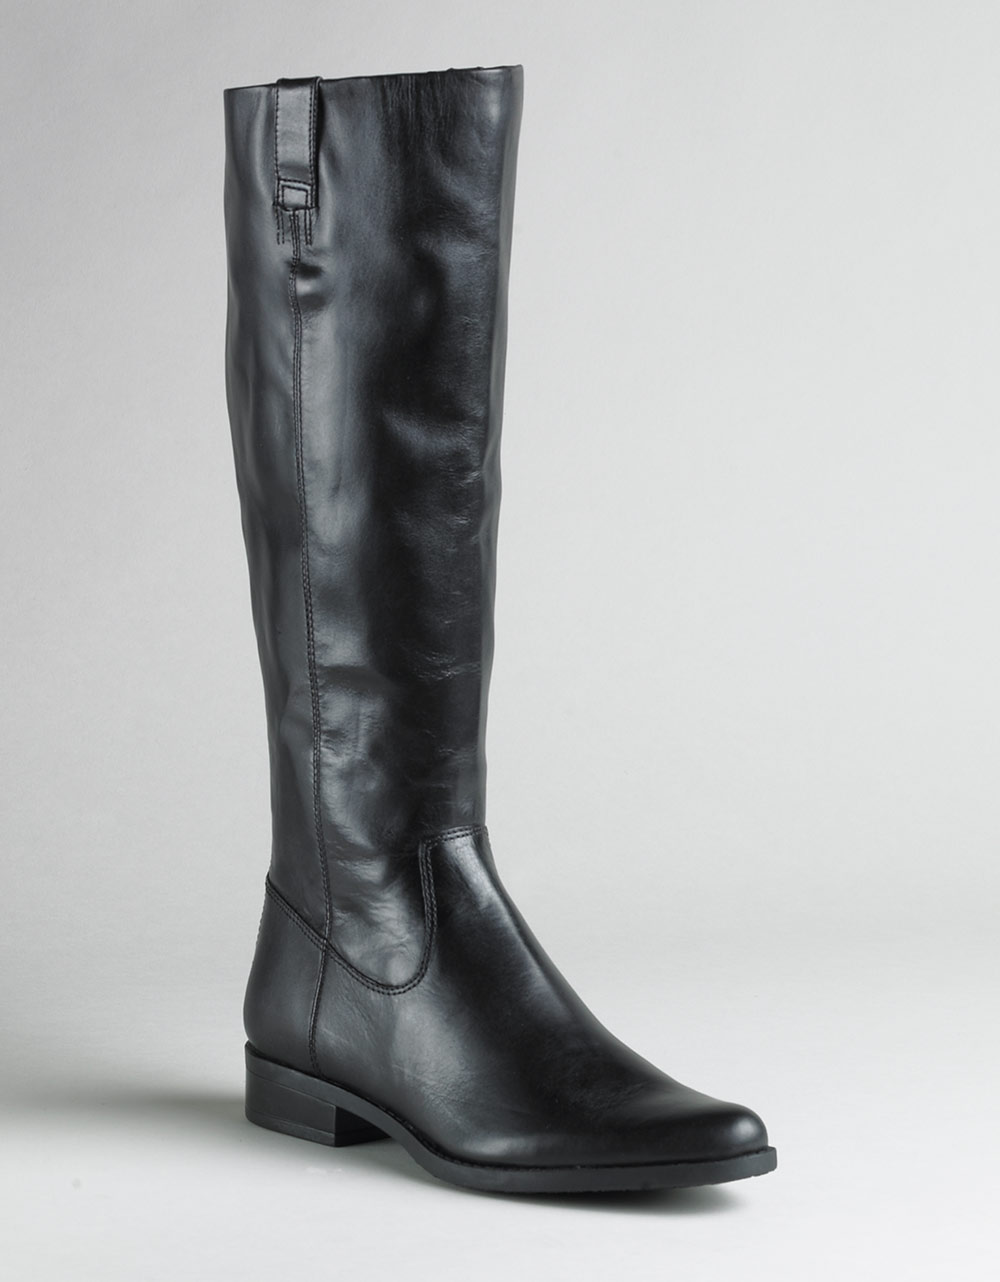 Calvin Klein Tamryn Leather Boots in Black - Lyst